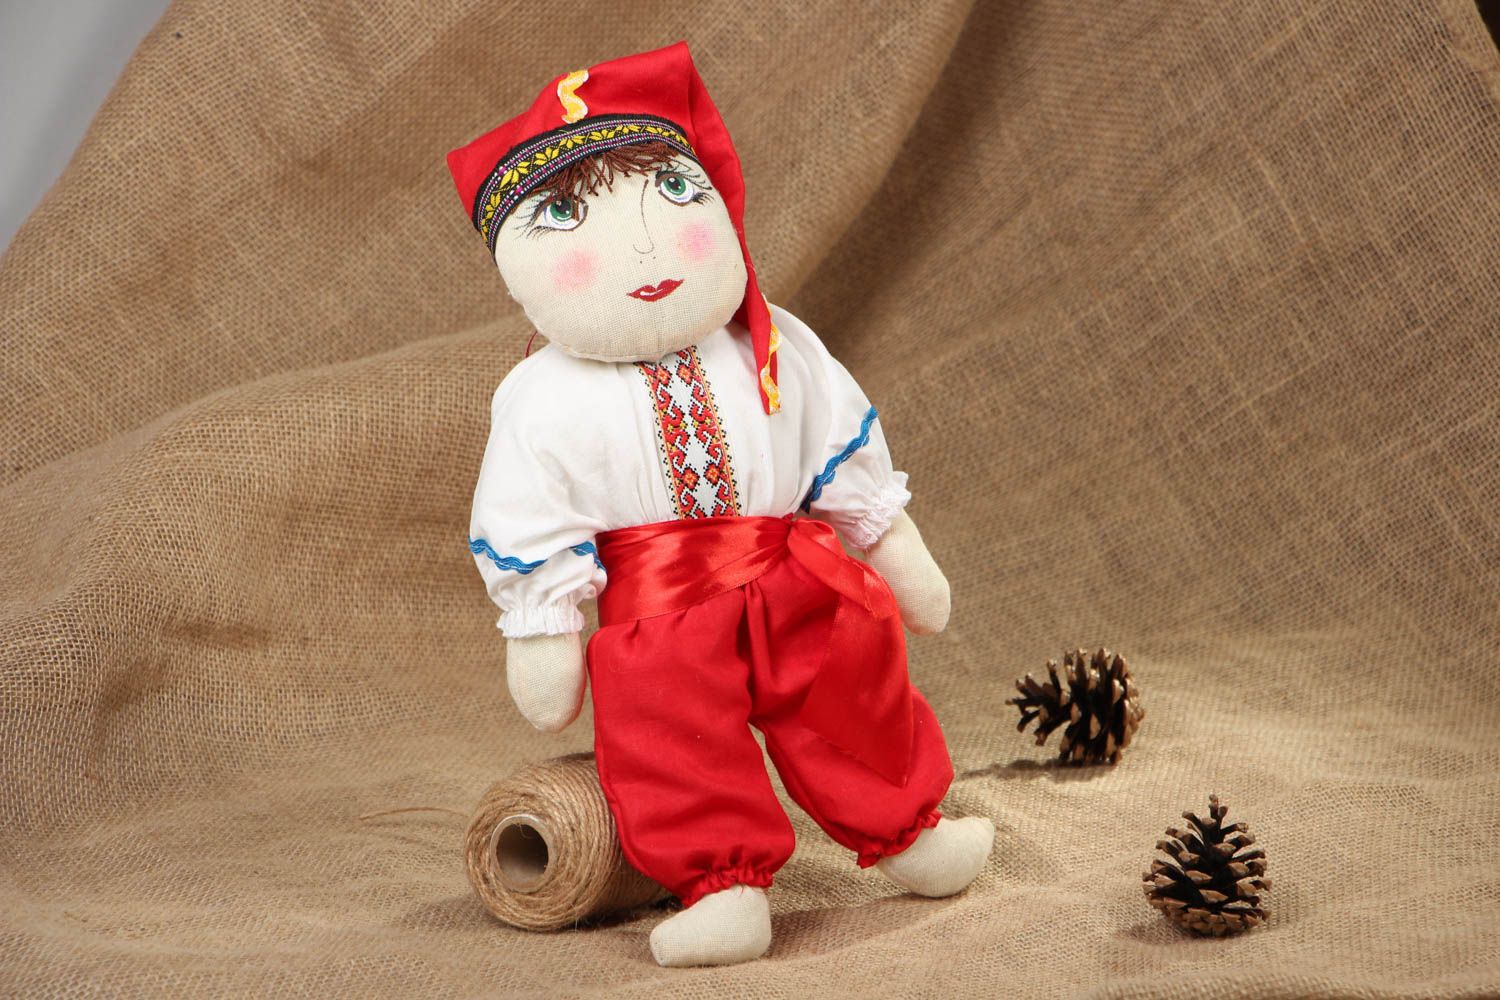 Textil Puppe handmade Kosak foto 5